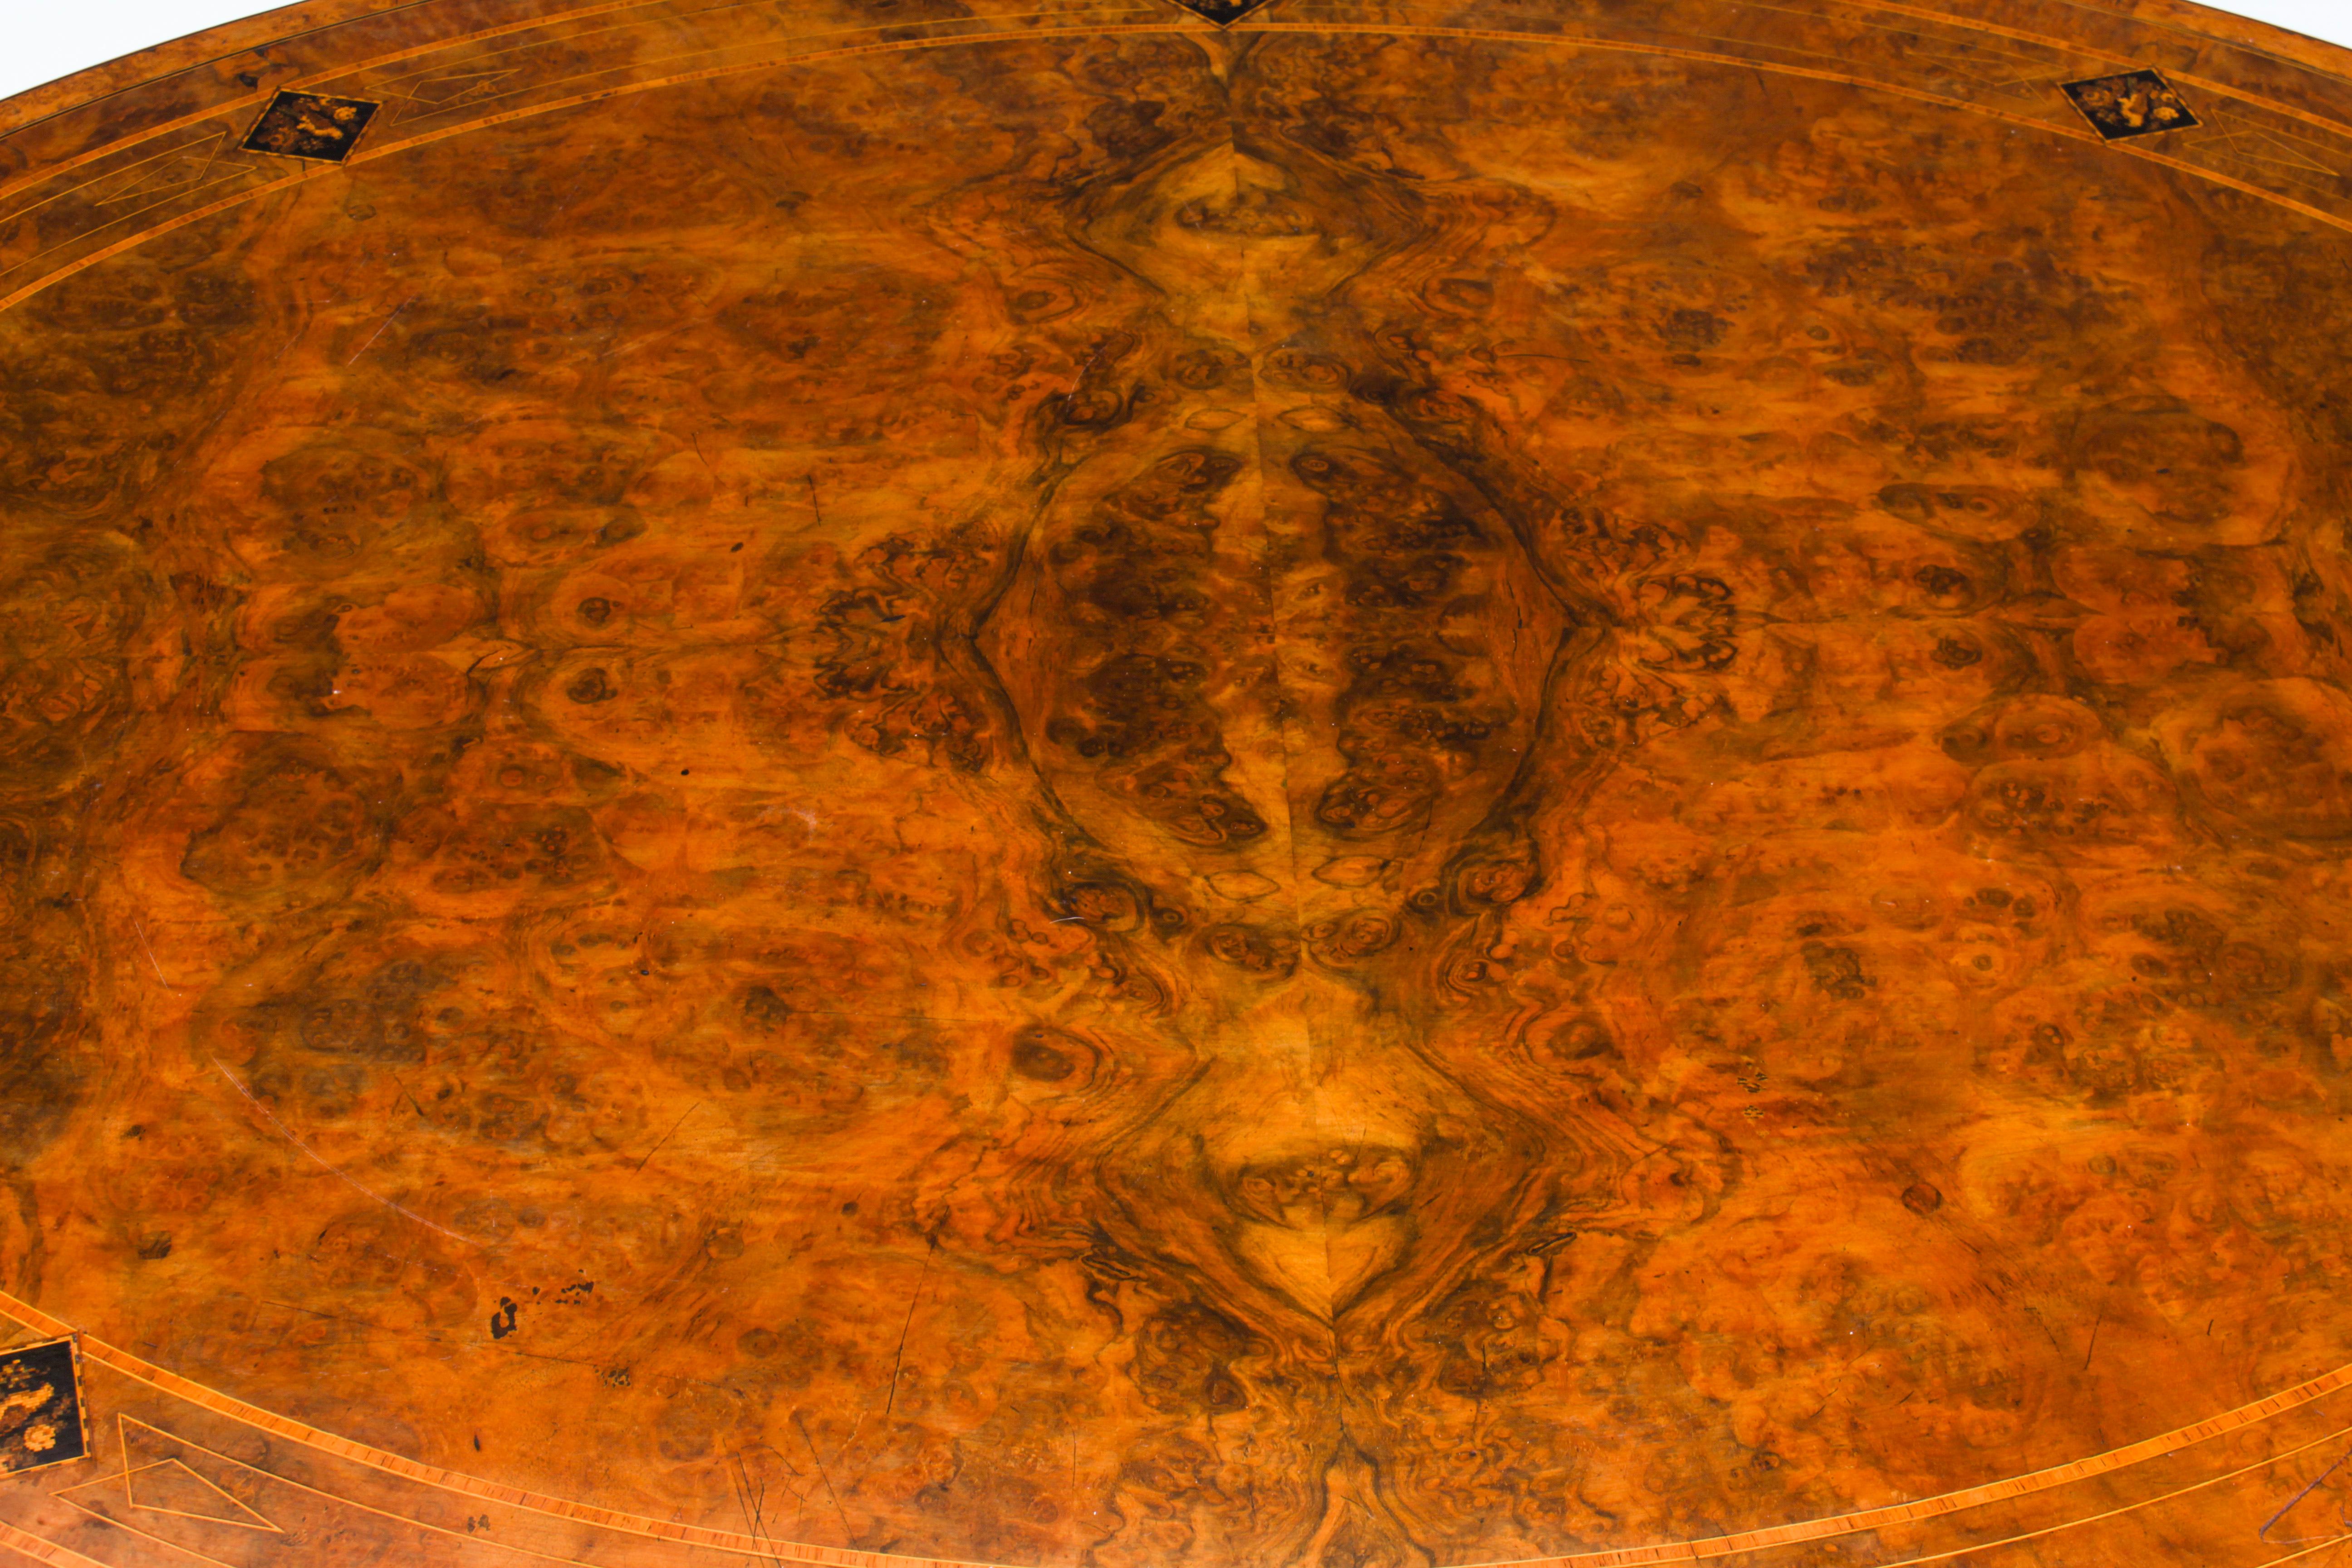 Mid-19th Century Antique Burr Walnut Oval Coffee Table 19th Century